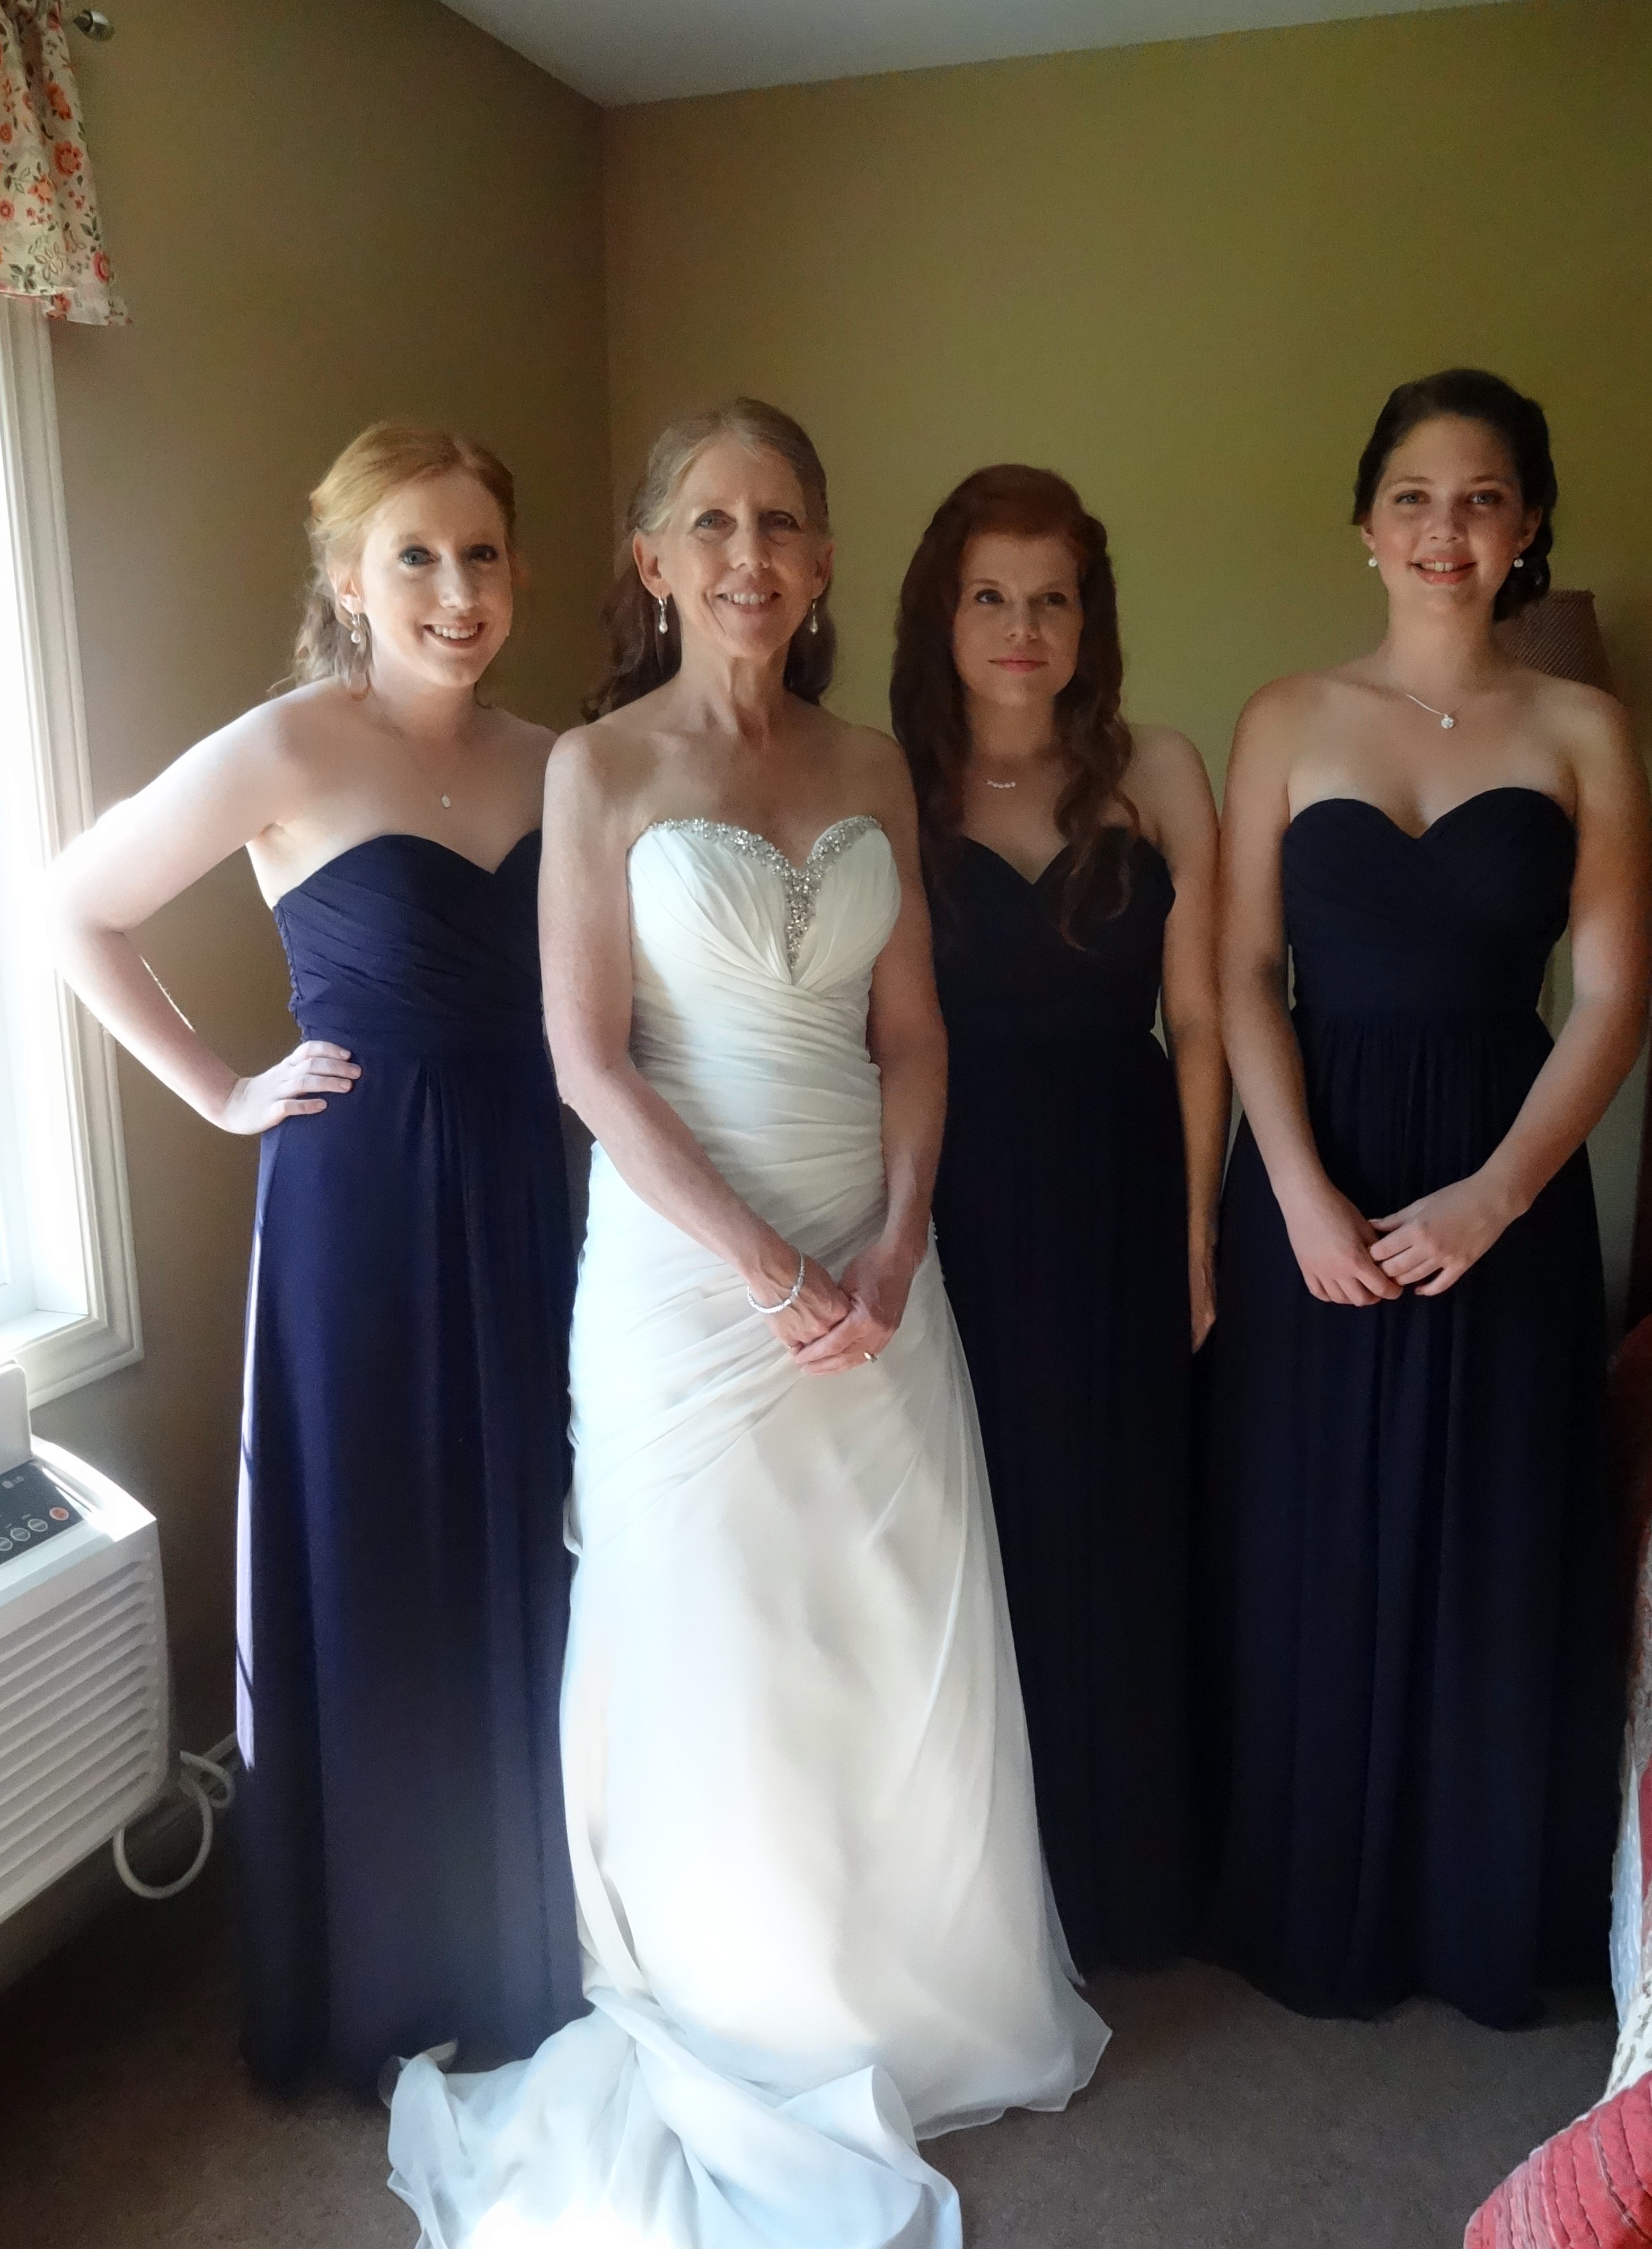 https://www.ottawaweddingmagazine.com/wp-content/uploads/2014/07/debbie-bridesmaids.jpg